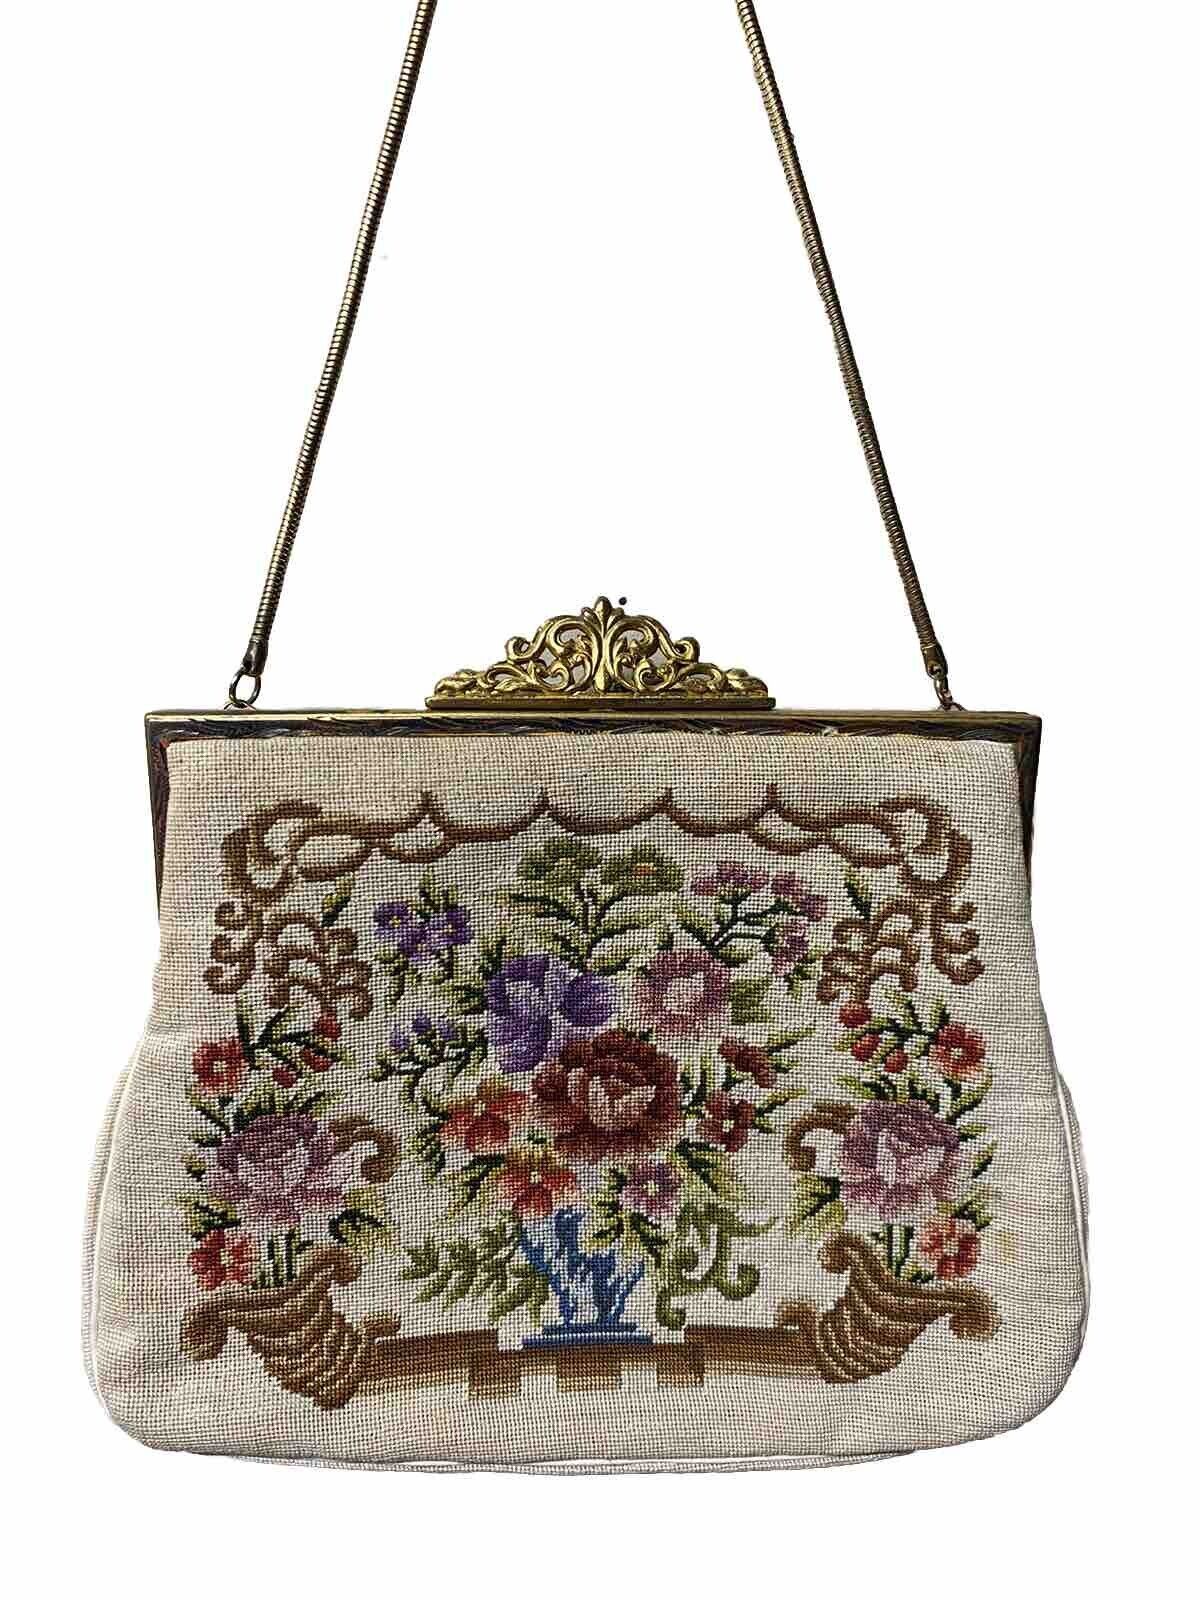 ANTIQUE Vintage 1950s Floral Needlepoint PETIT POINT French Style Purse Handbag